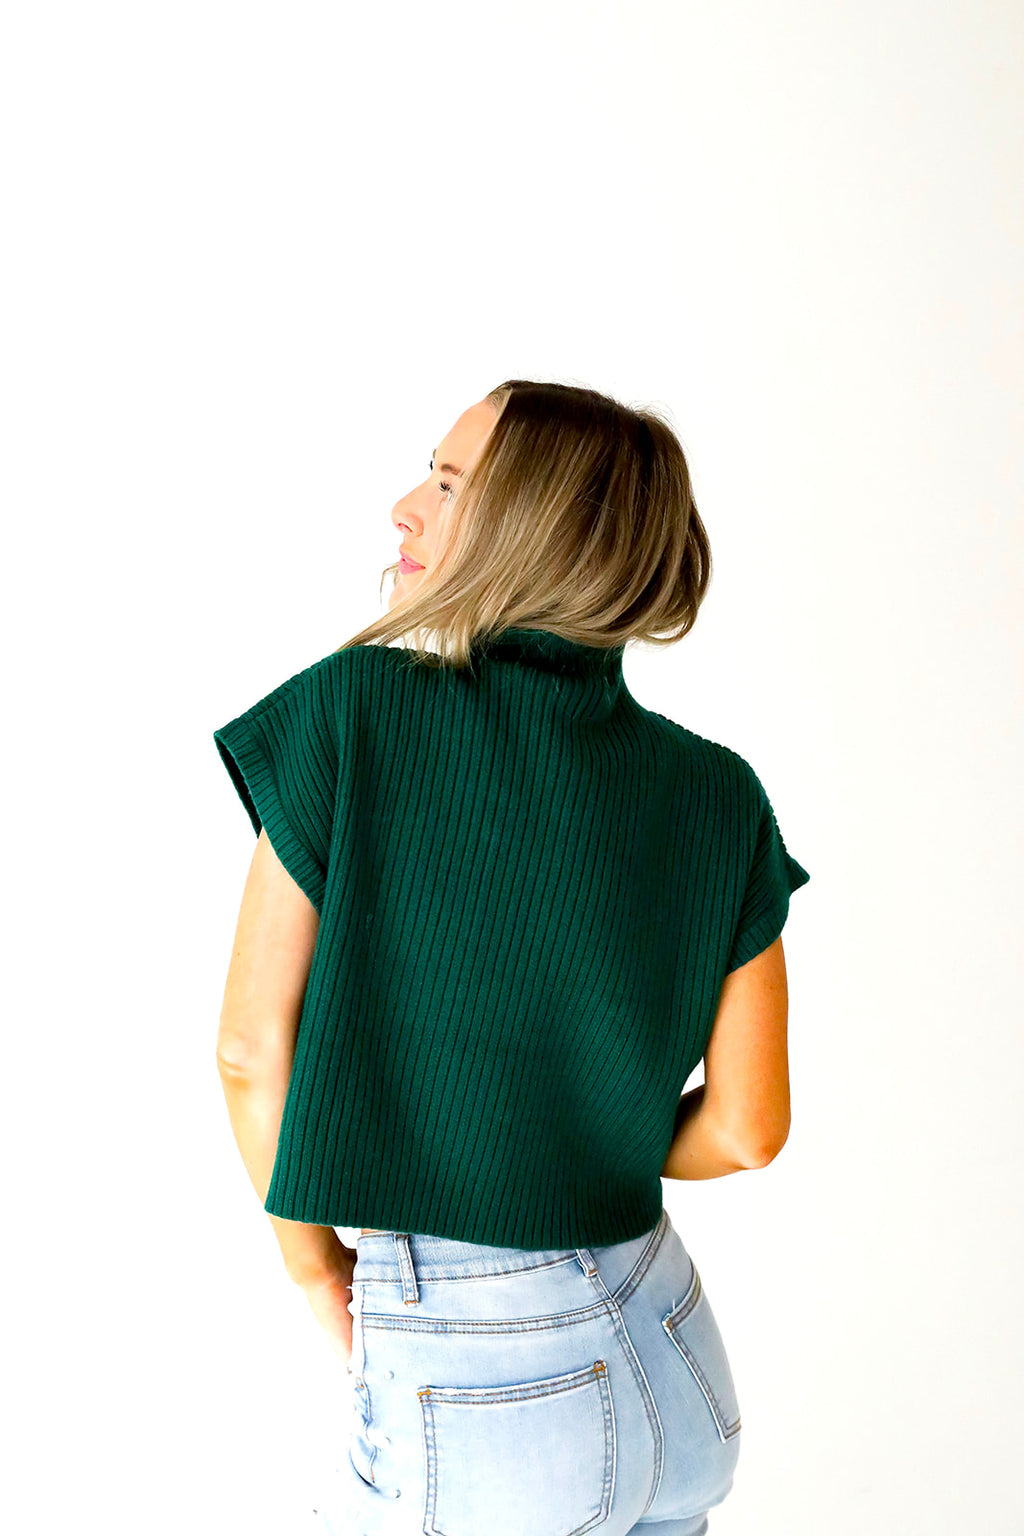 Just Passing Through Sweater Top-Dark Green